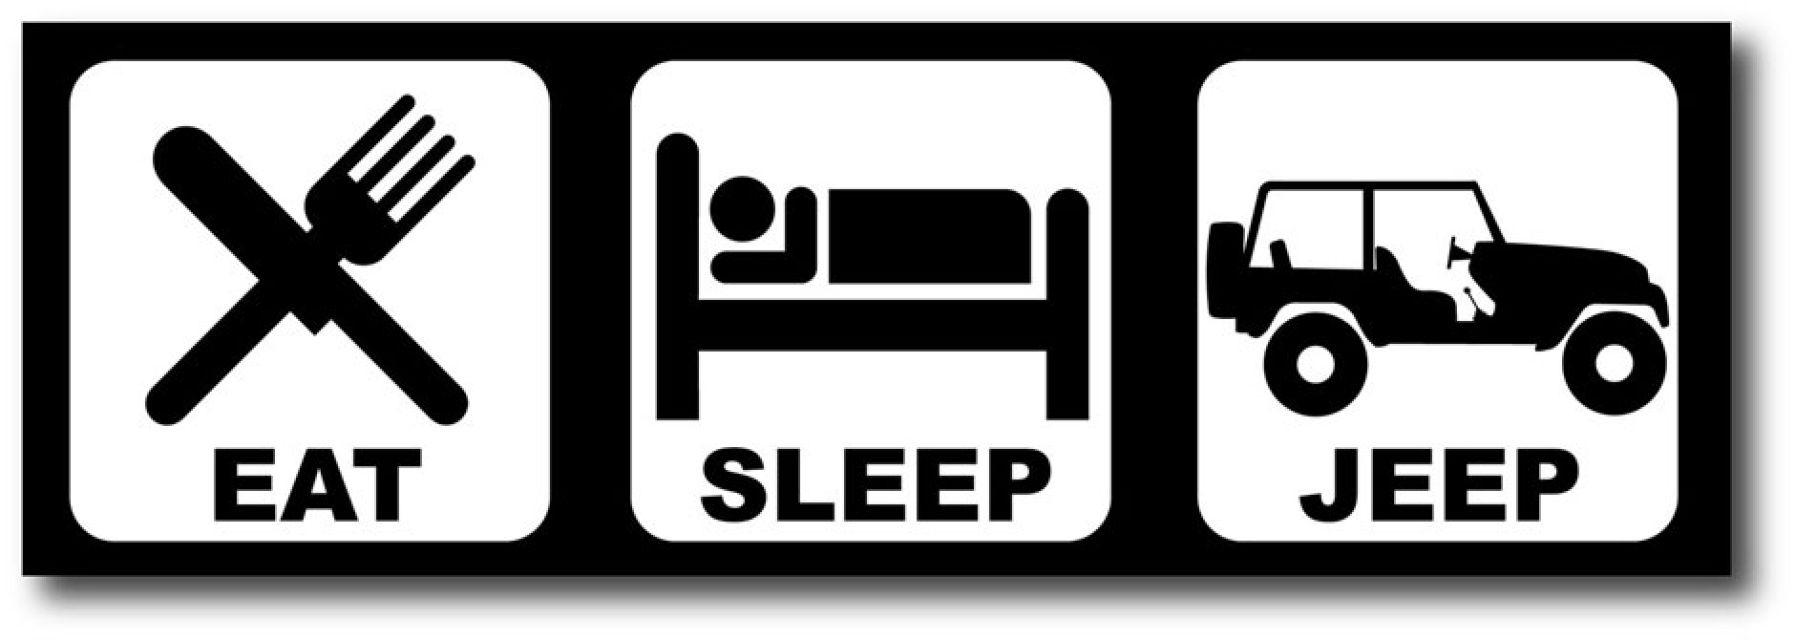 Funny Jeep Logo - EAT SLEEP JEEP